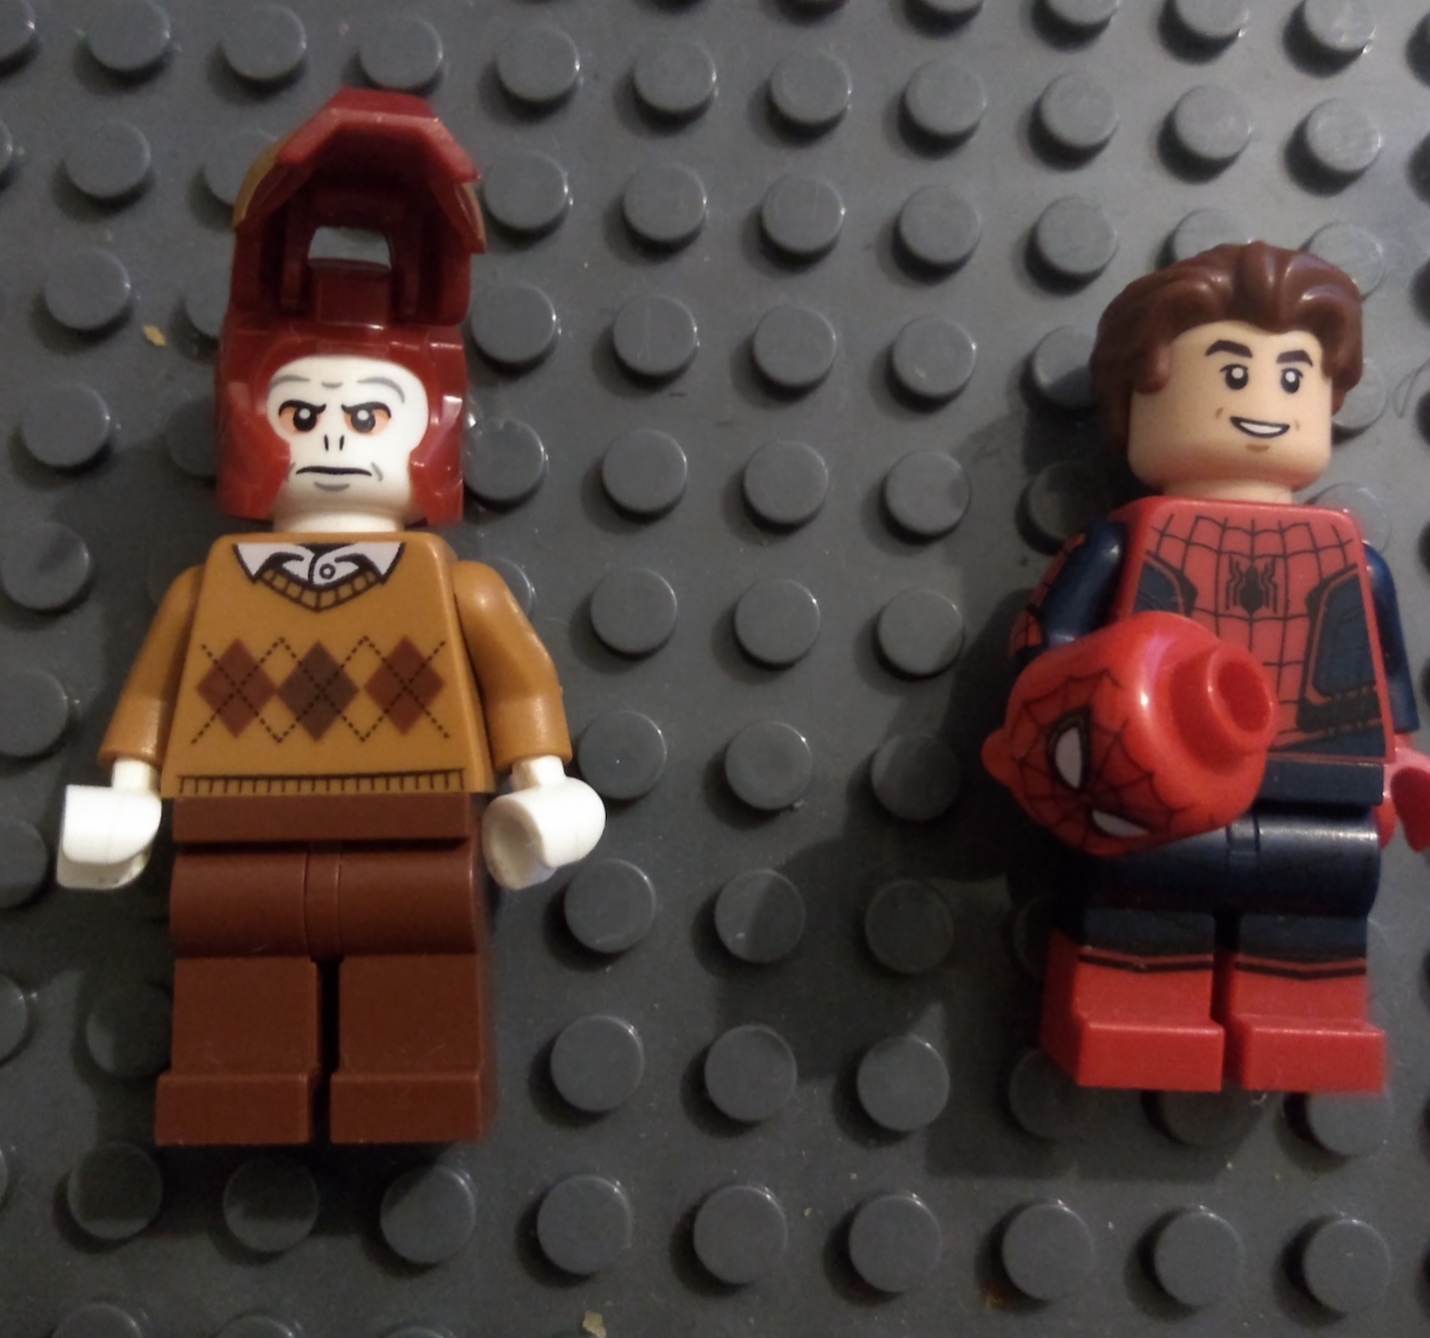 Custom Minifigures: Is it real LEGO? - Minifigures.com Blog